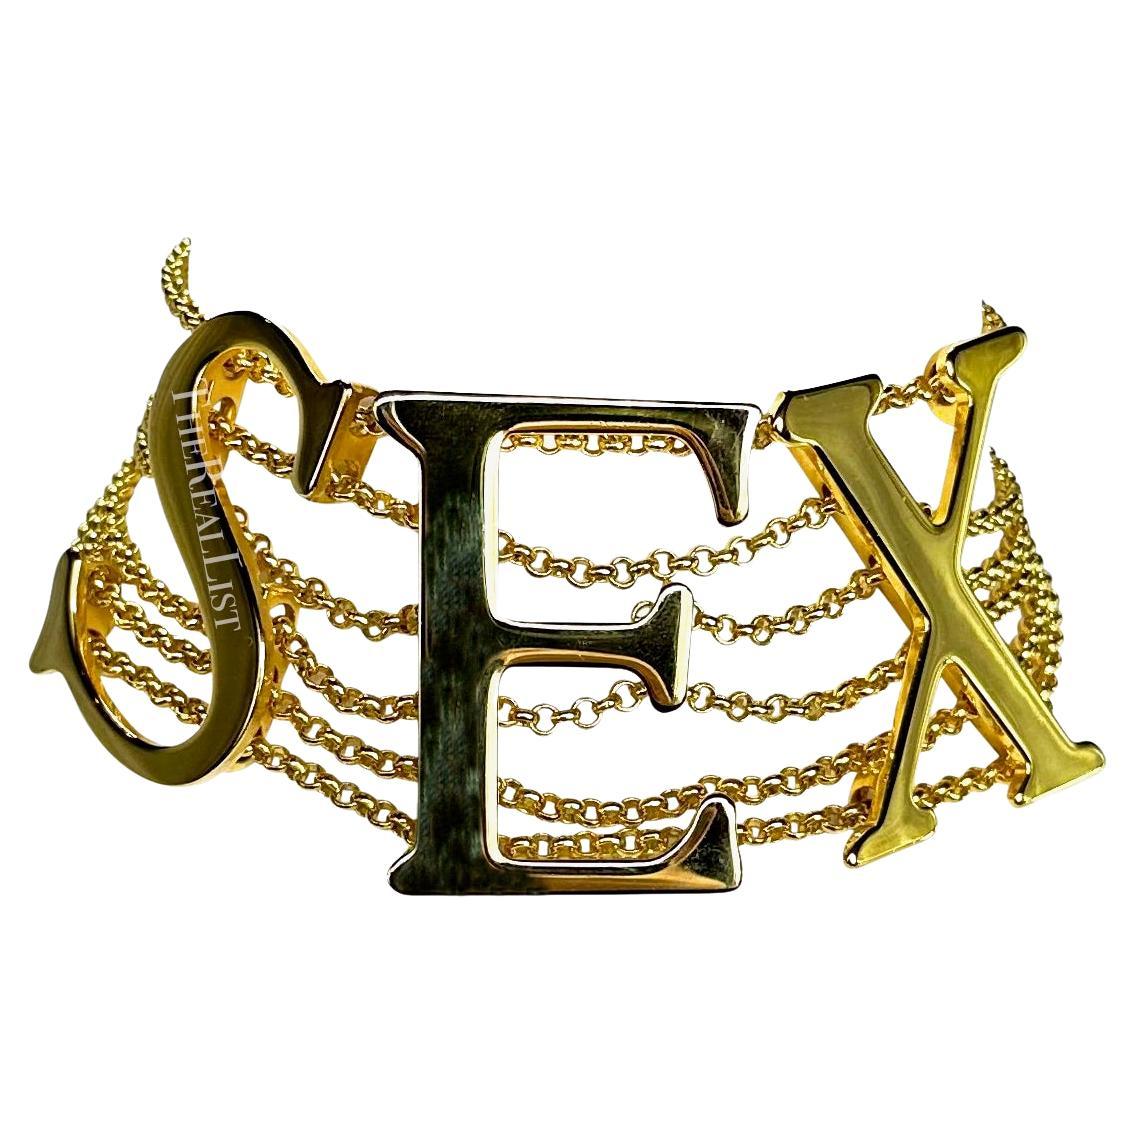 S/S 2003 Dolce & Gabbana 'Sex & Love' Runway Gold SEX Choker Necklace For Sale